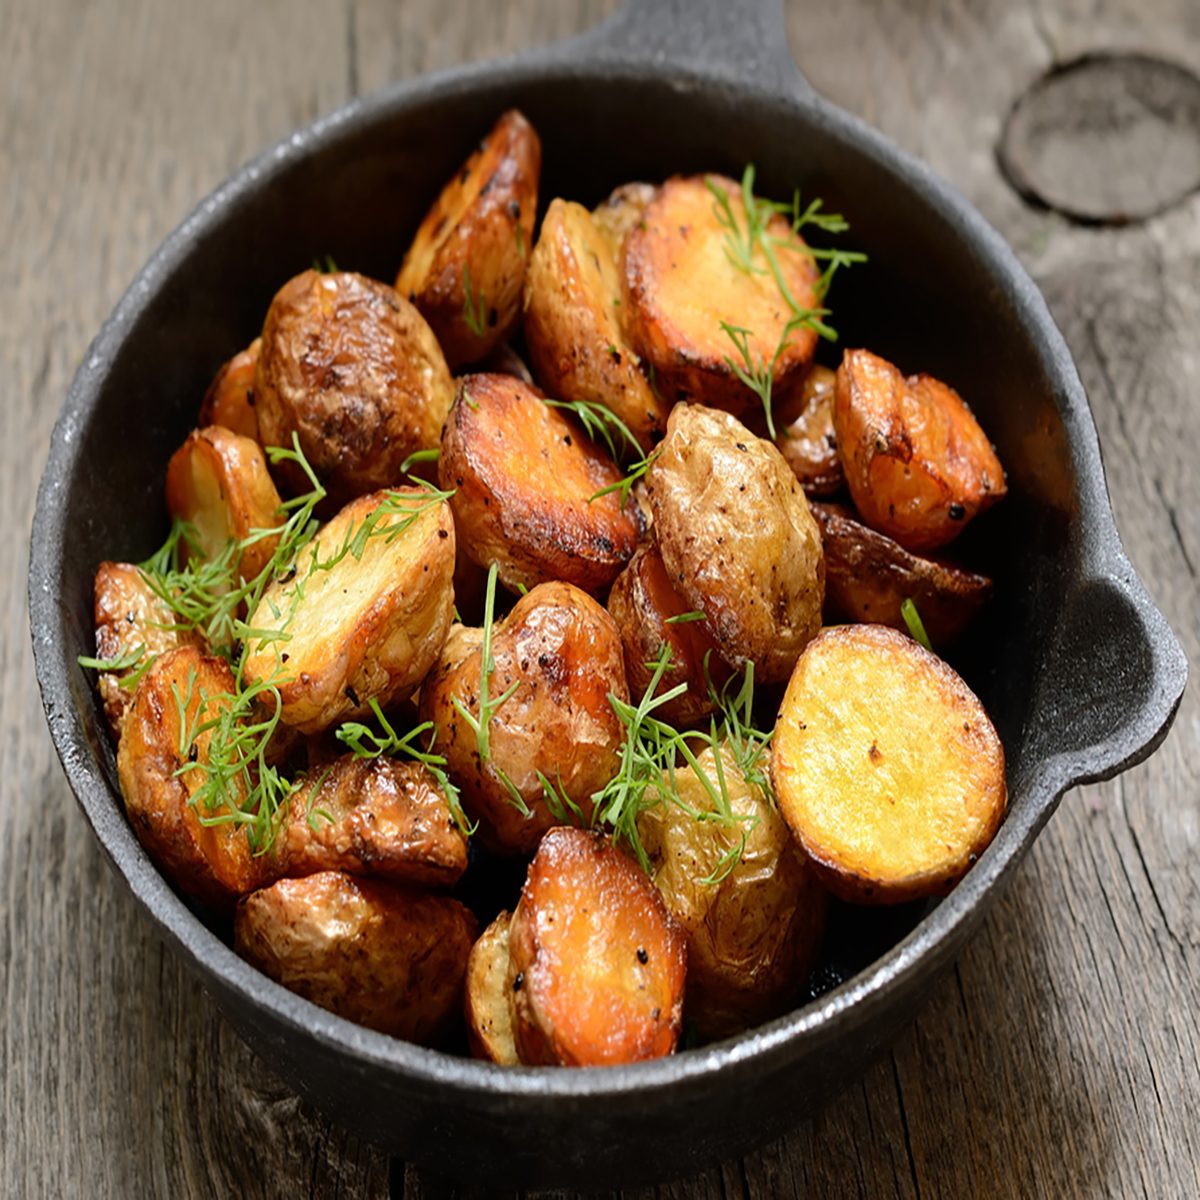 8 Healthy Ways to Eat Potatoes